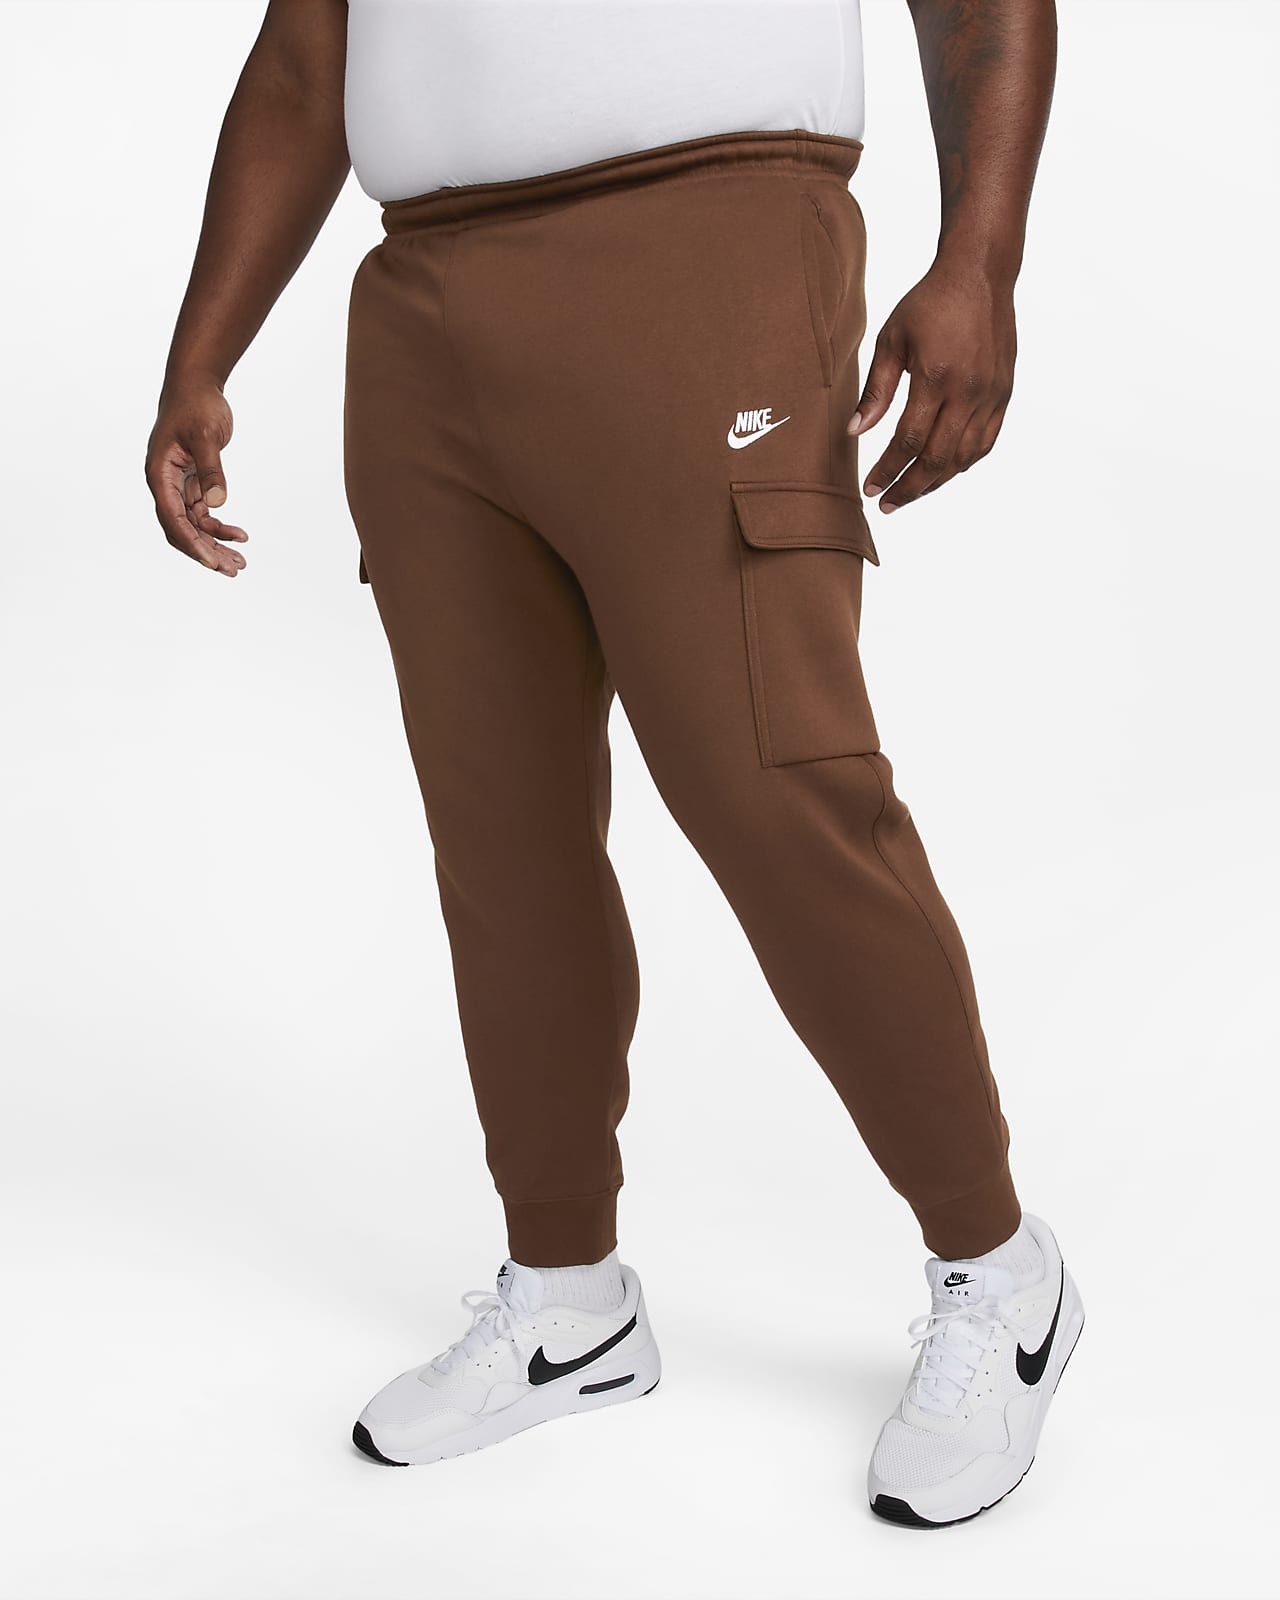 Nike Track Pants Black - XL